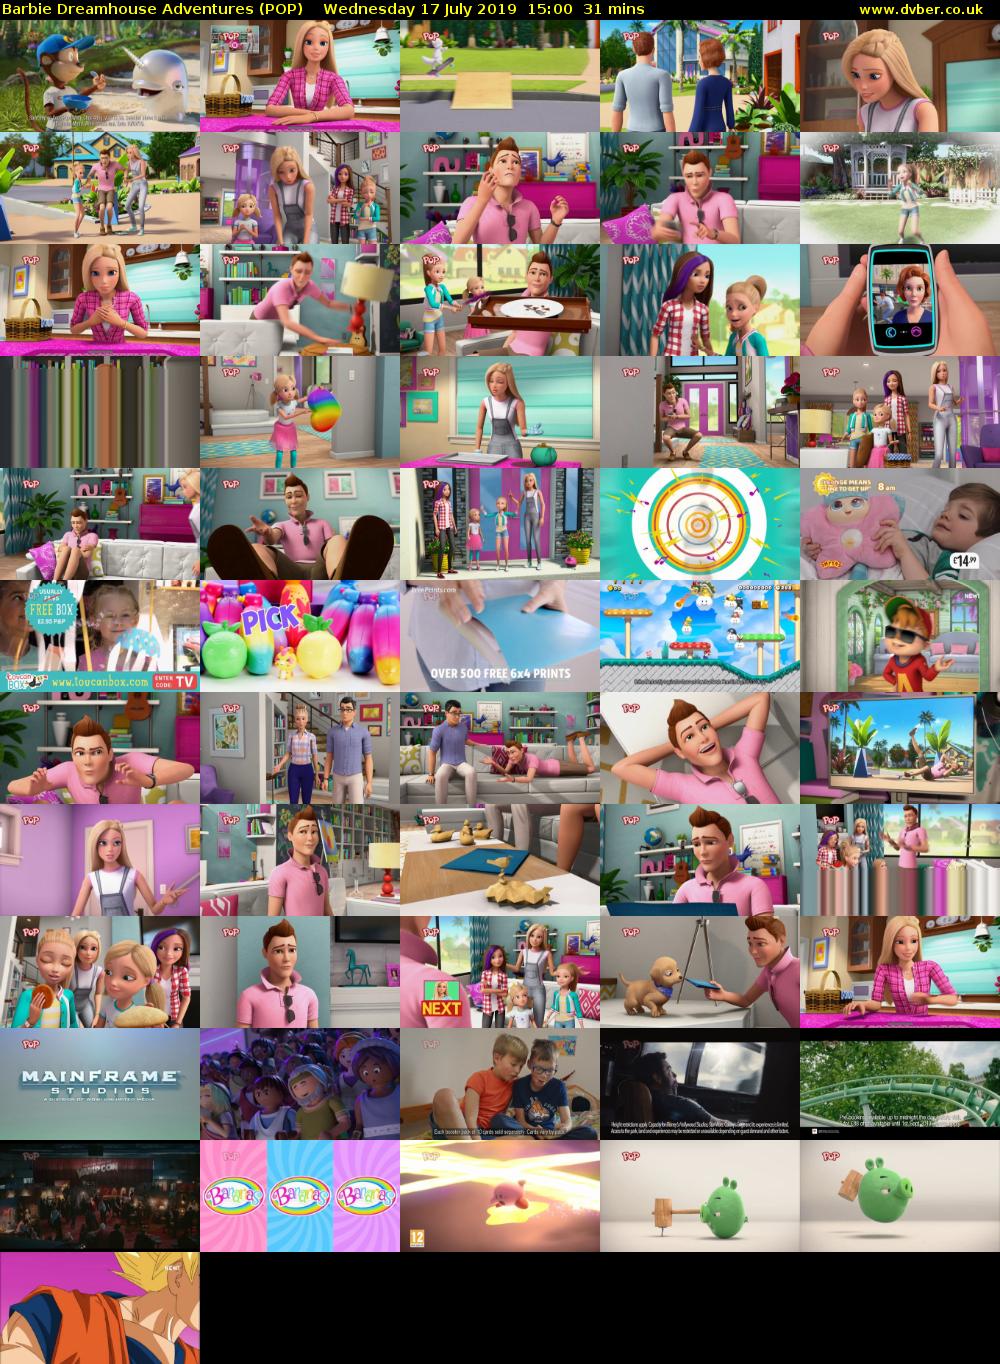 Barbie Dreamhouse Adventures (POP) Wednesday 17 July 2019 15:00 - 15:31